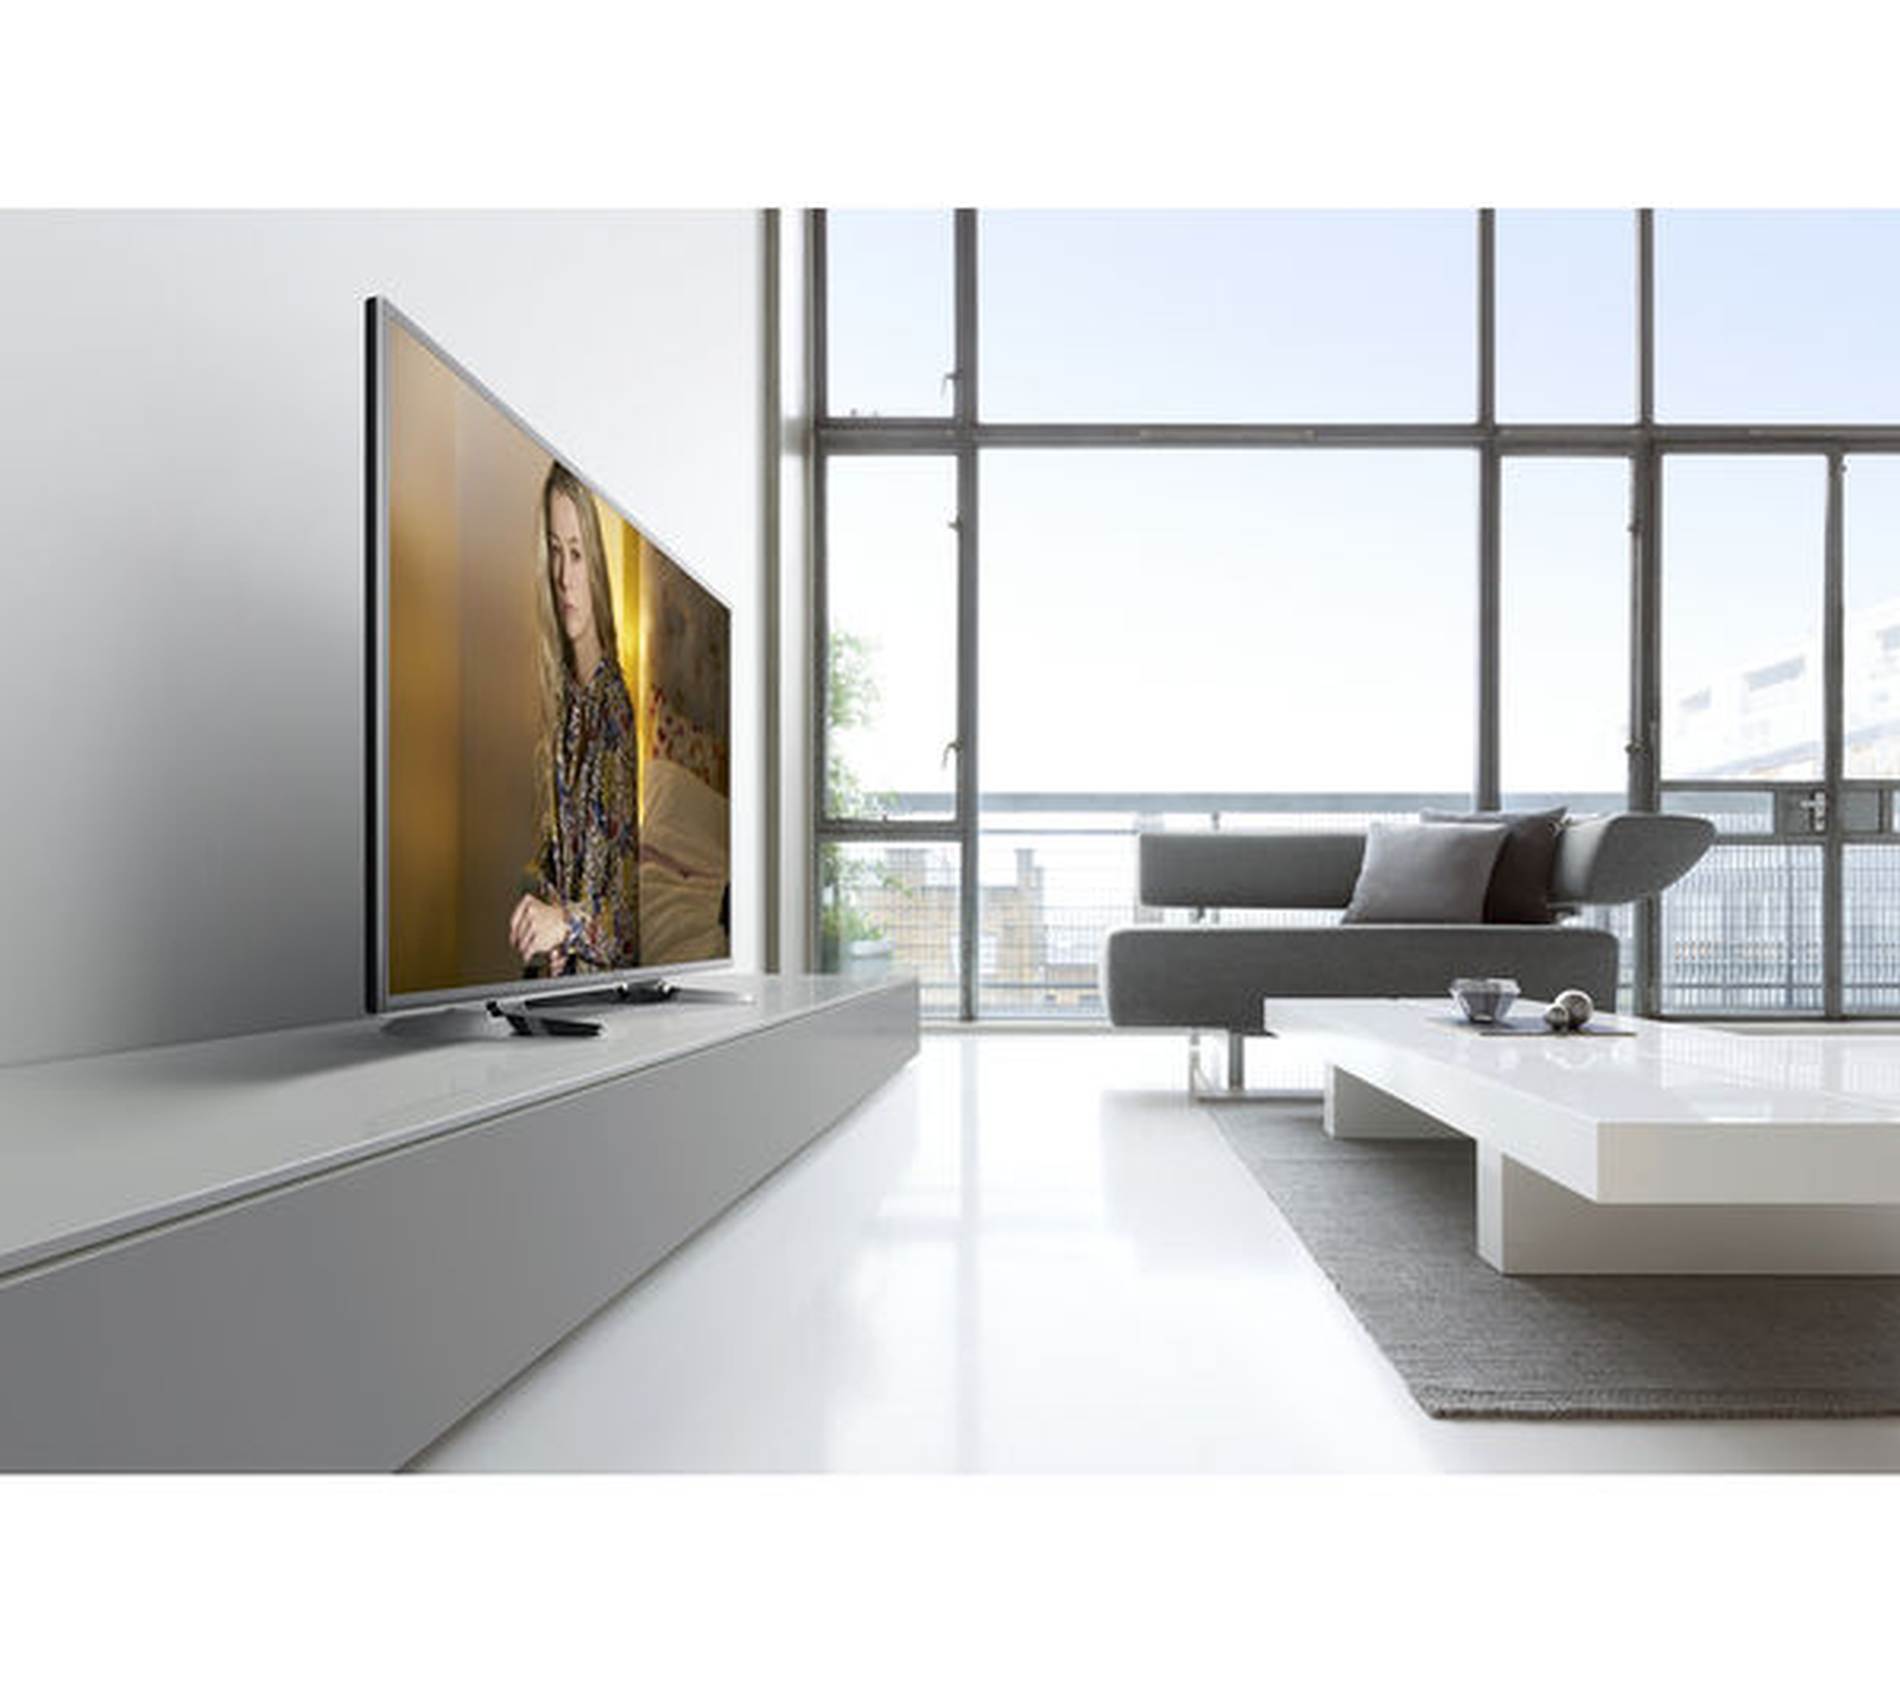 49 Panasonic TX-49DX650B 4K Ultra HD Smart LED TV